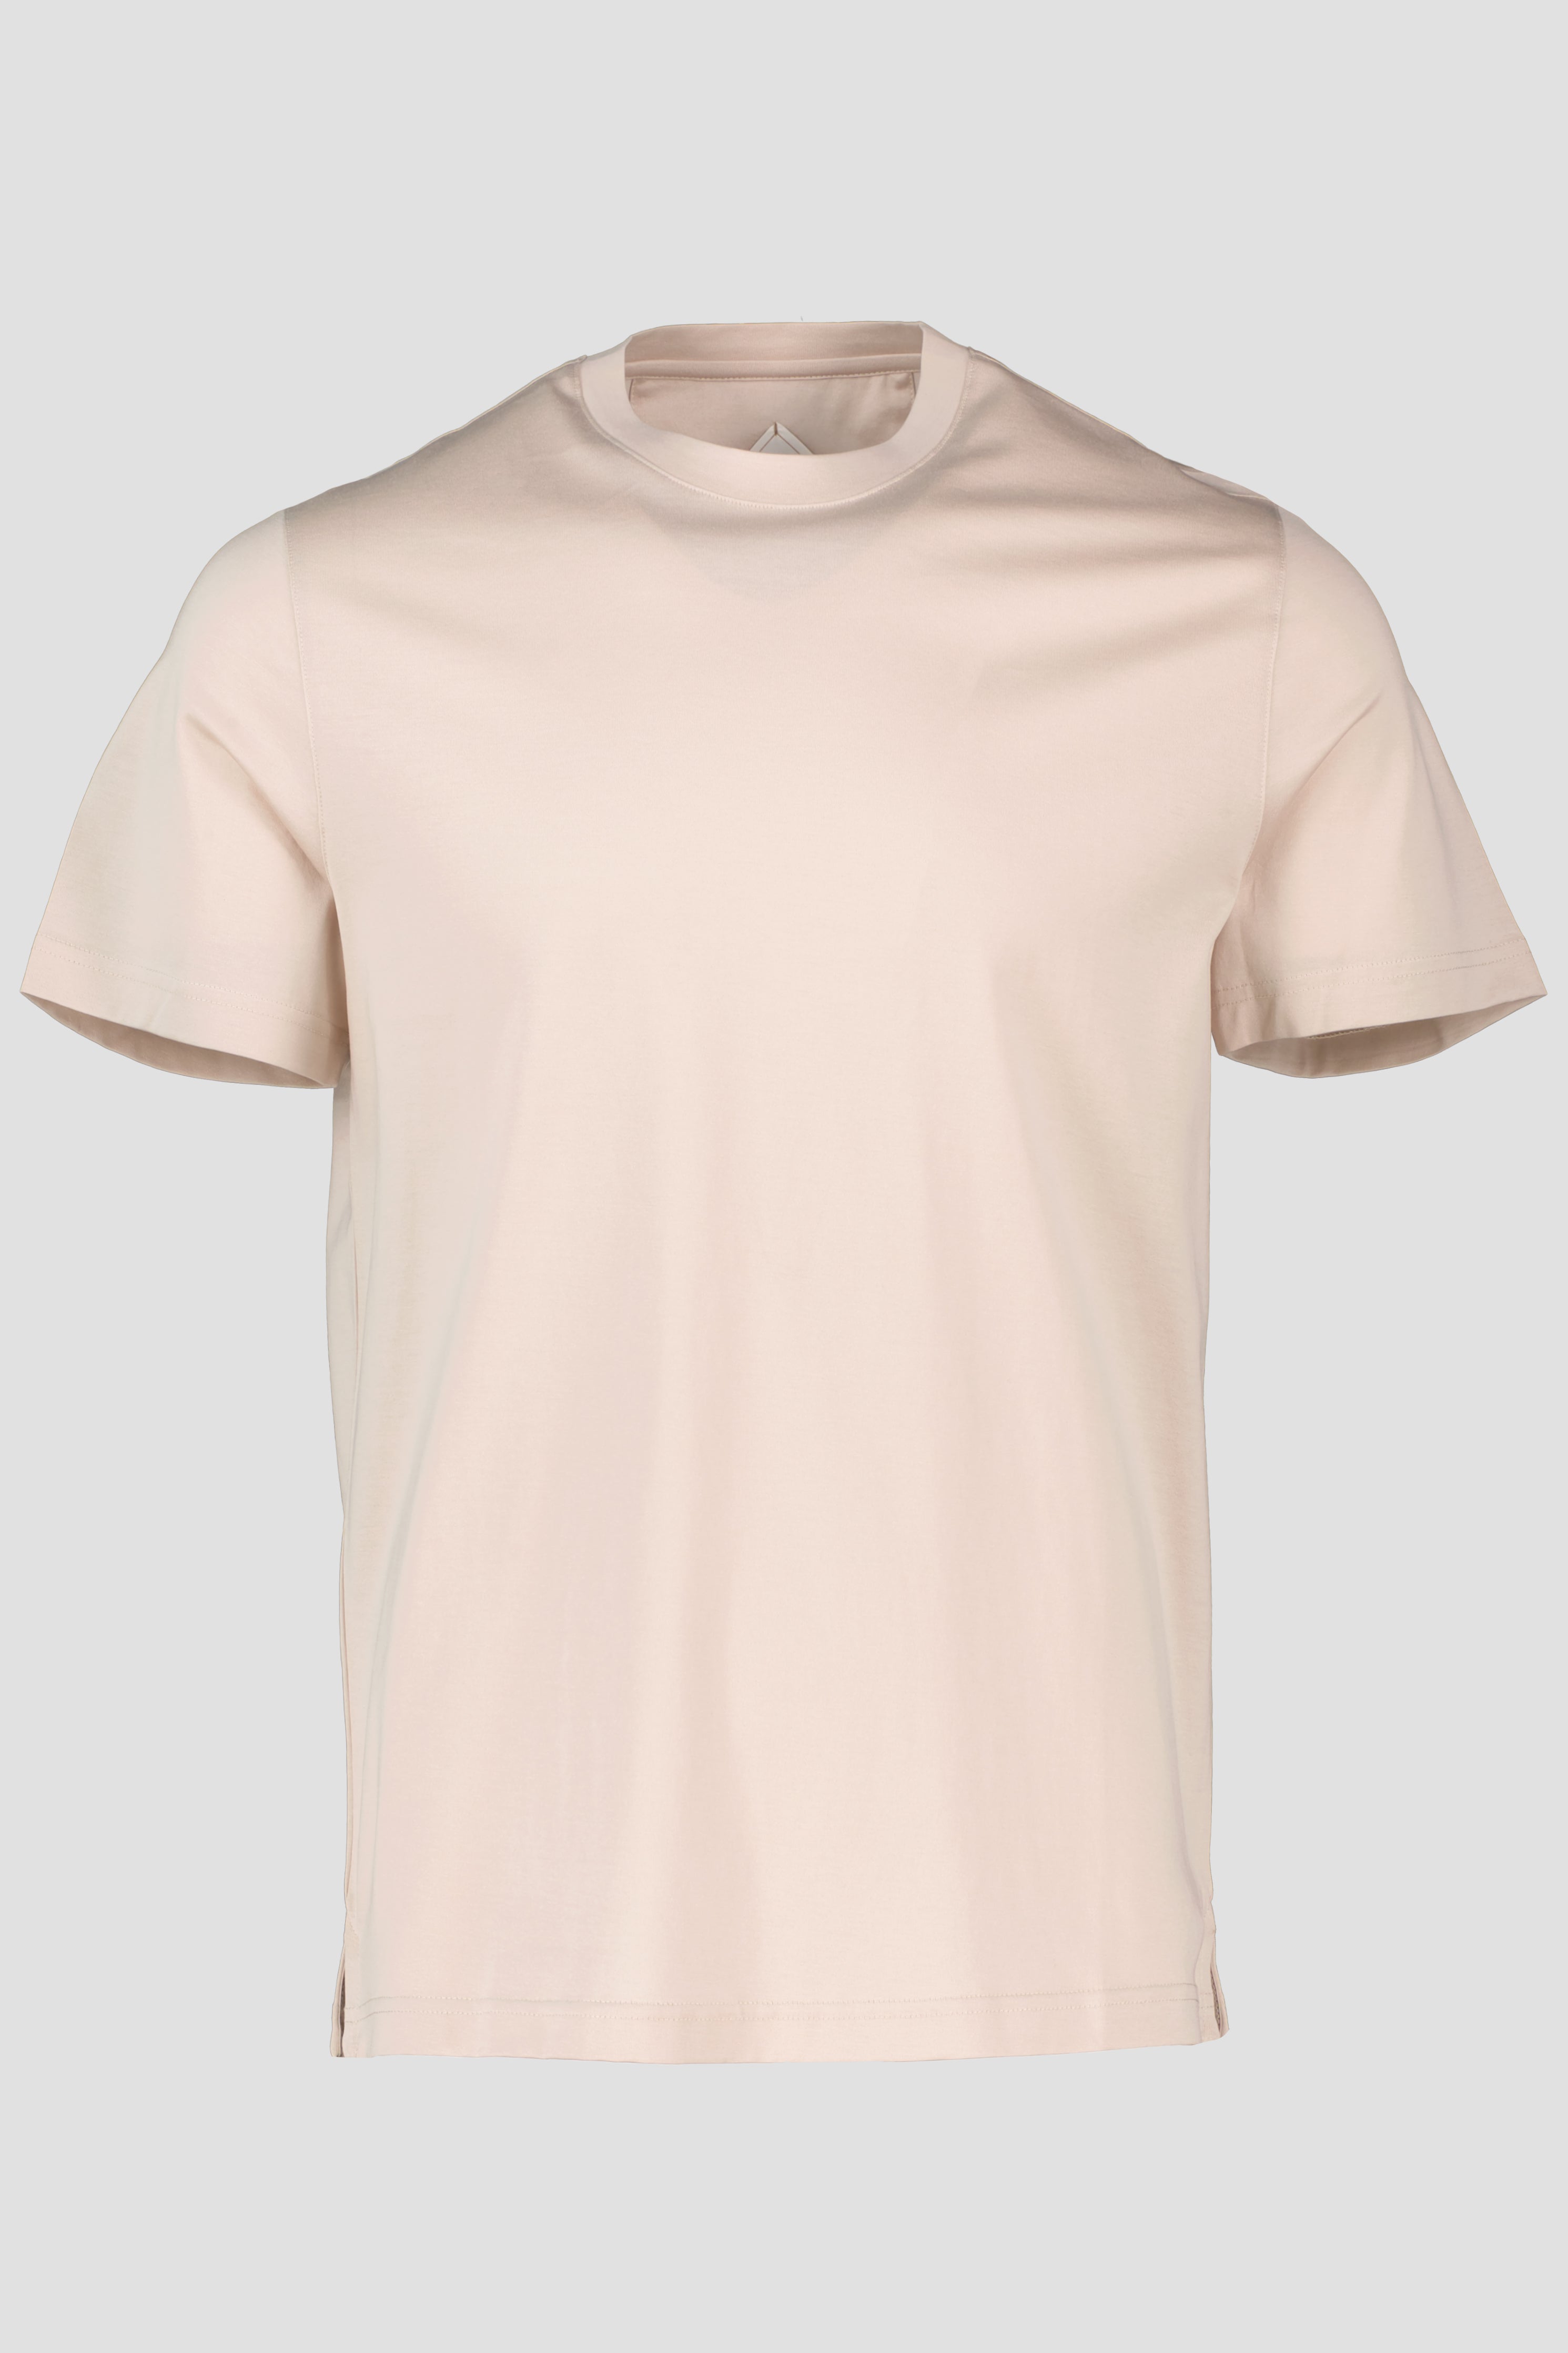 Men's Pal Zileri Beige Mercerised T Shirt